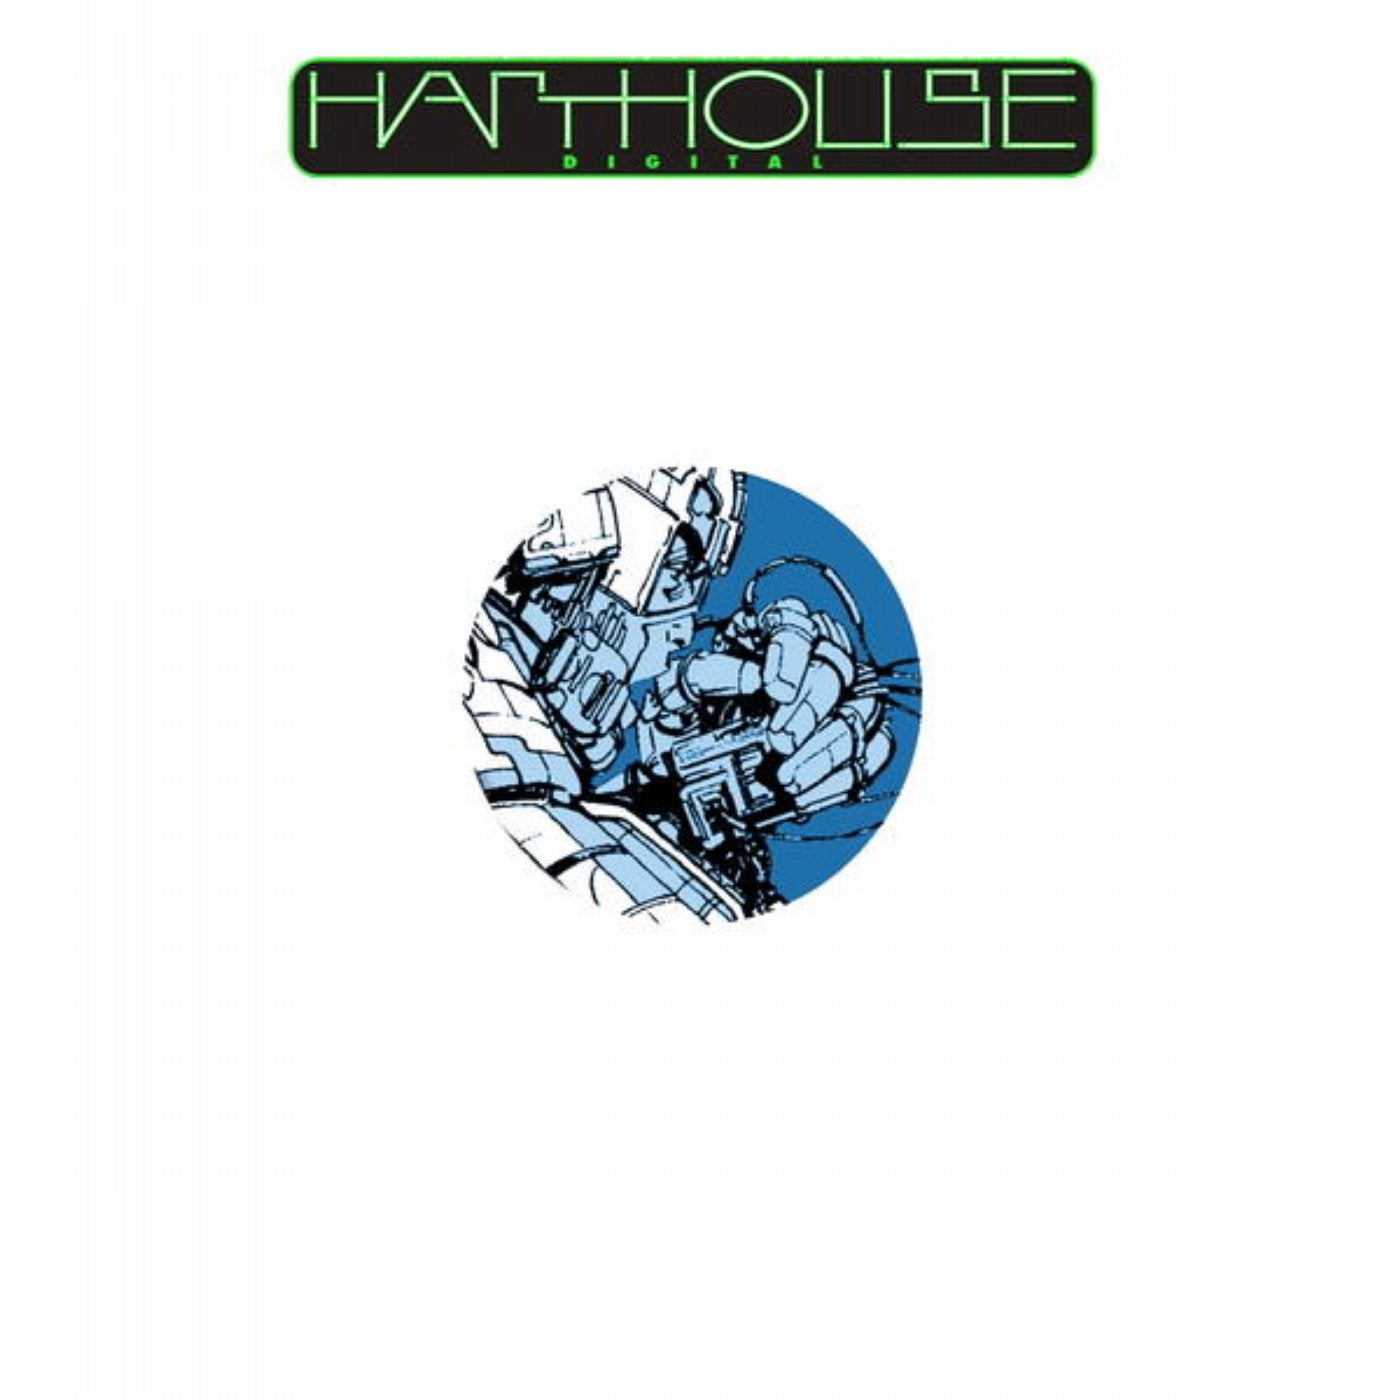 Best of Harthouse Digital